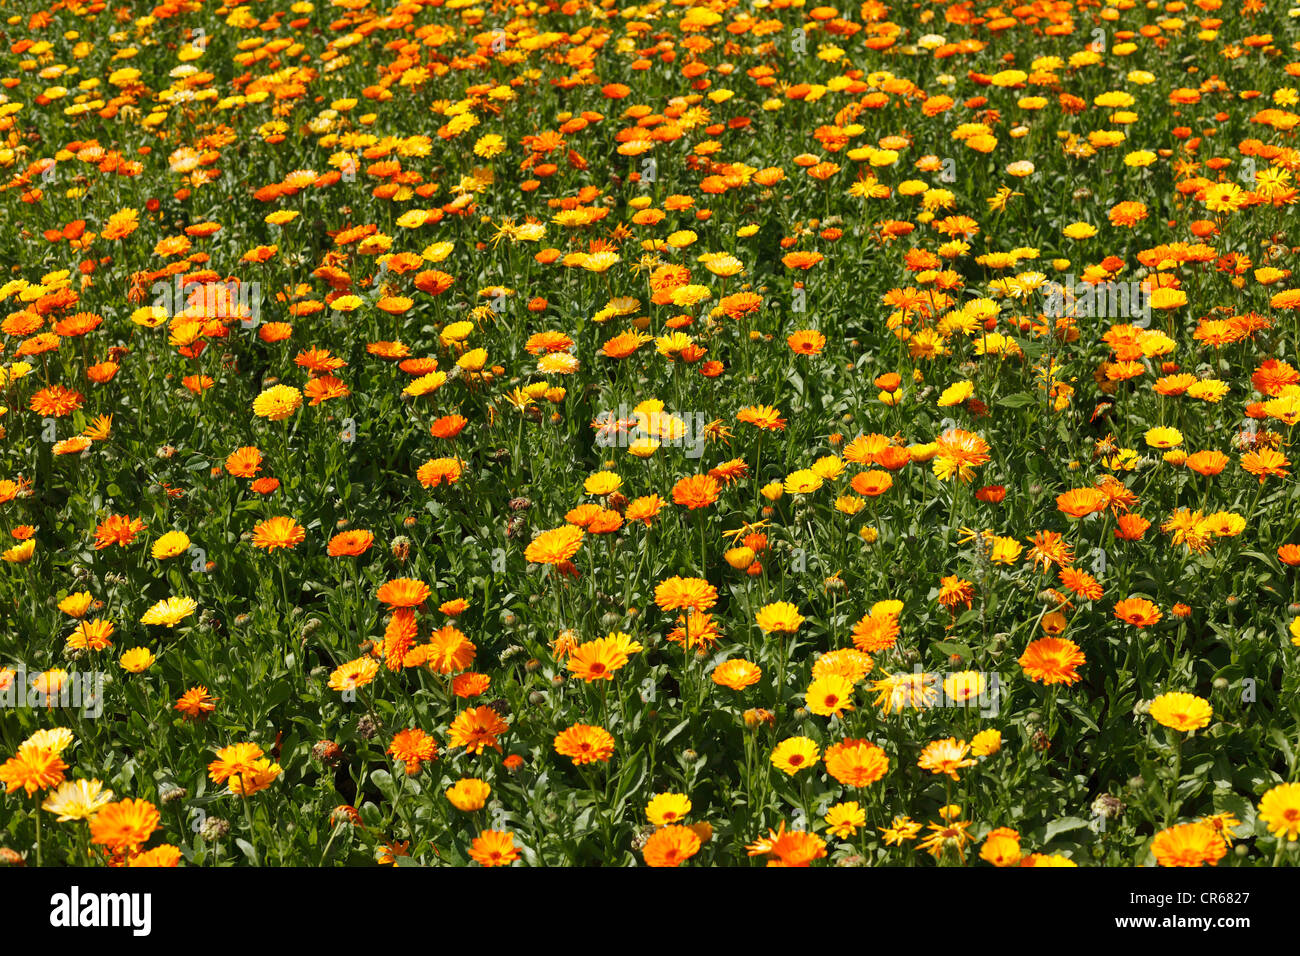 Germany, Bavaria, View of pot marigold field Stock Photo